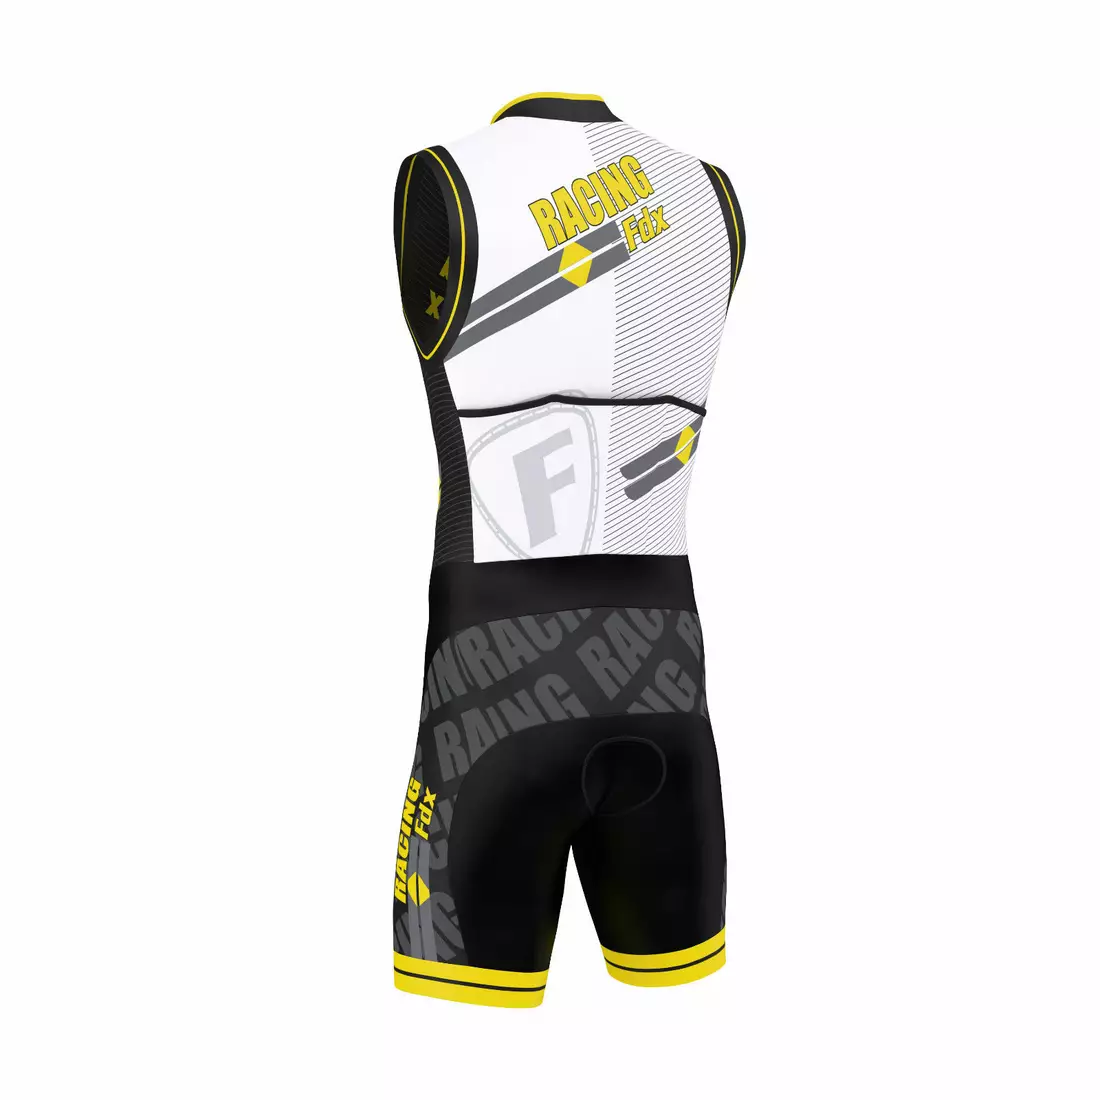 Costum de triatlon FDX 1050 negru și galben